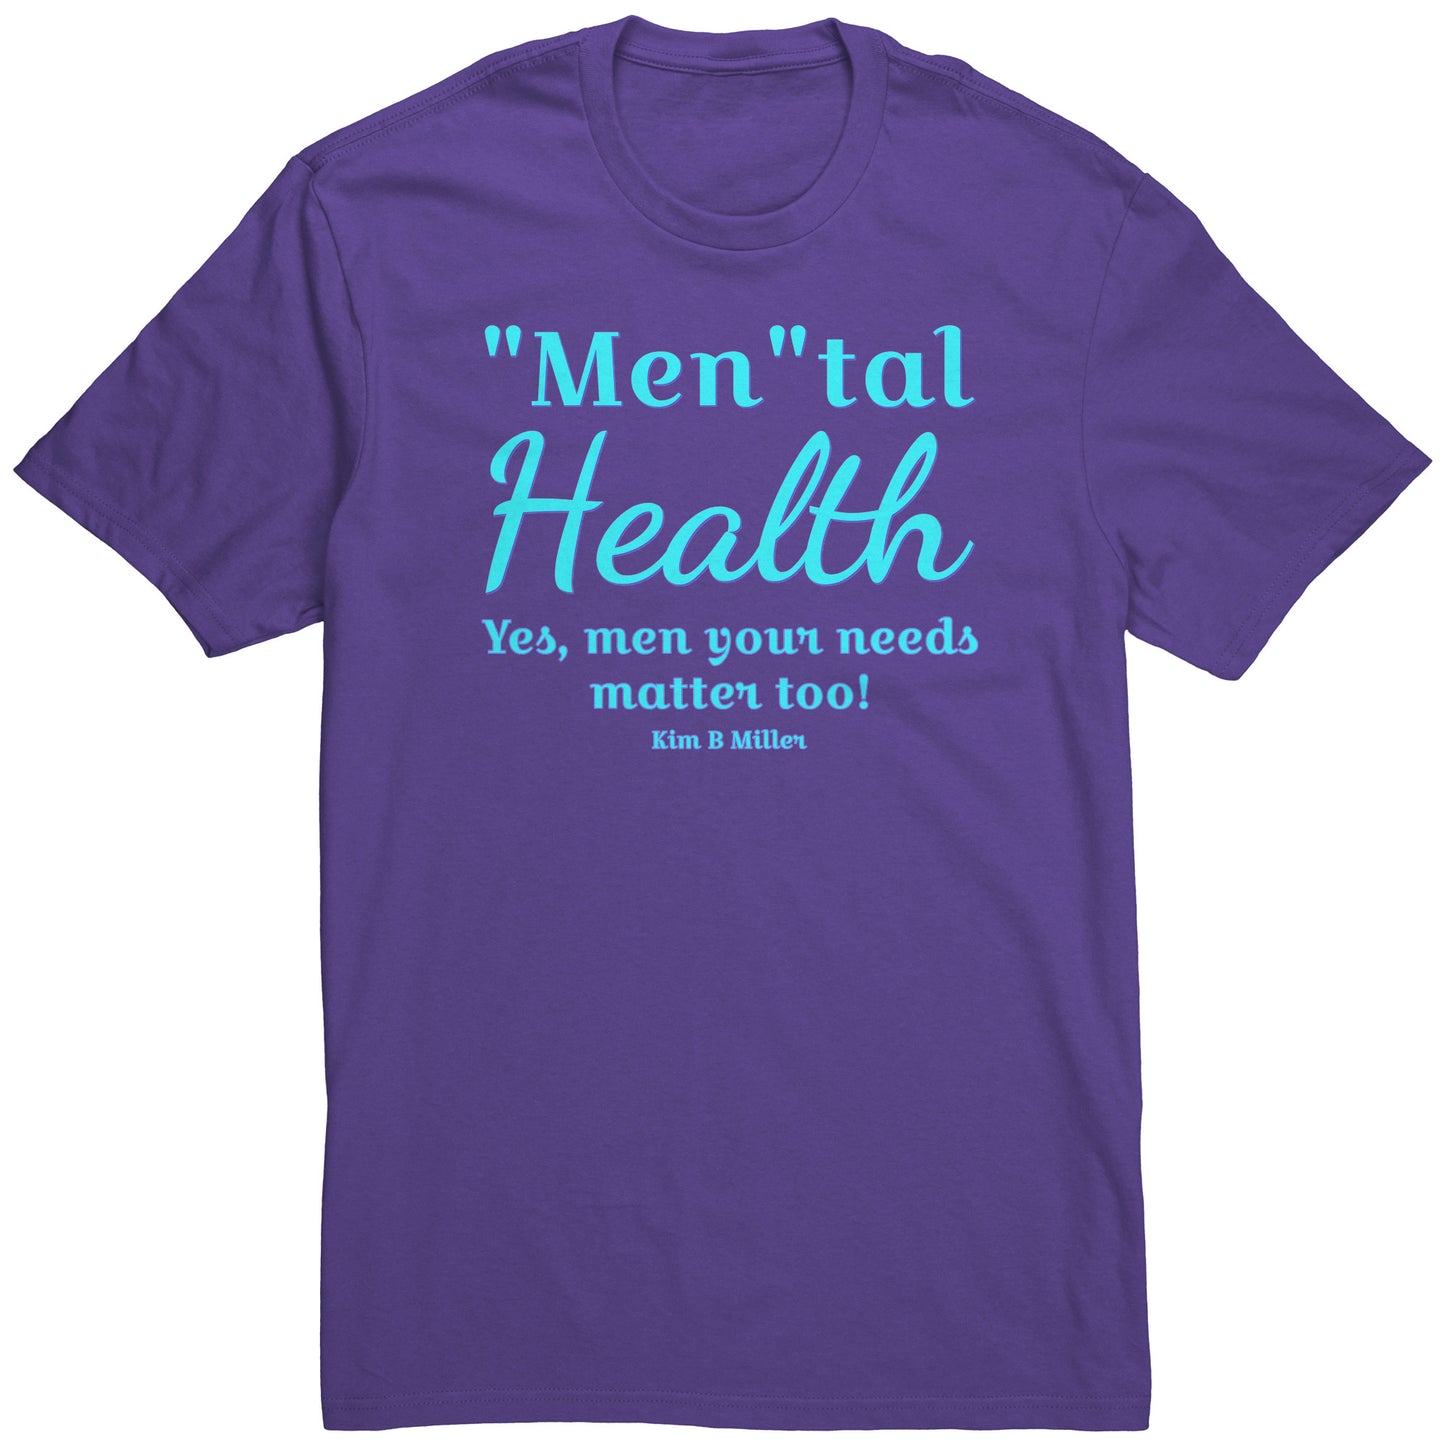 "Men"tal Health: 	 District Men's Shirt